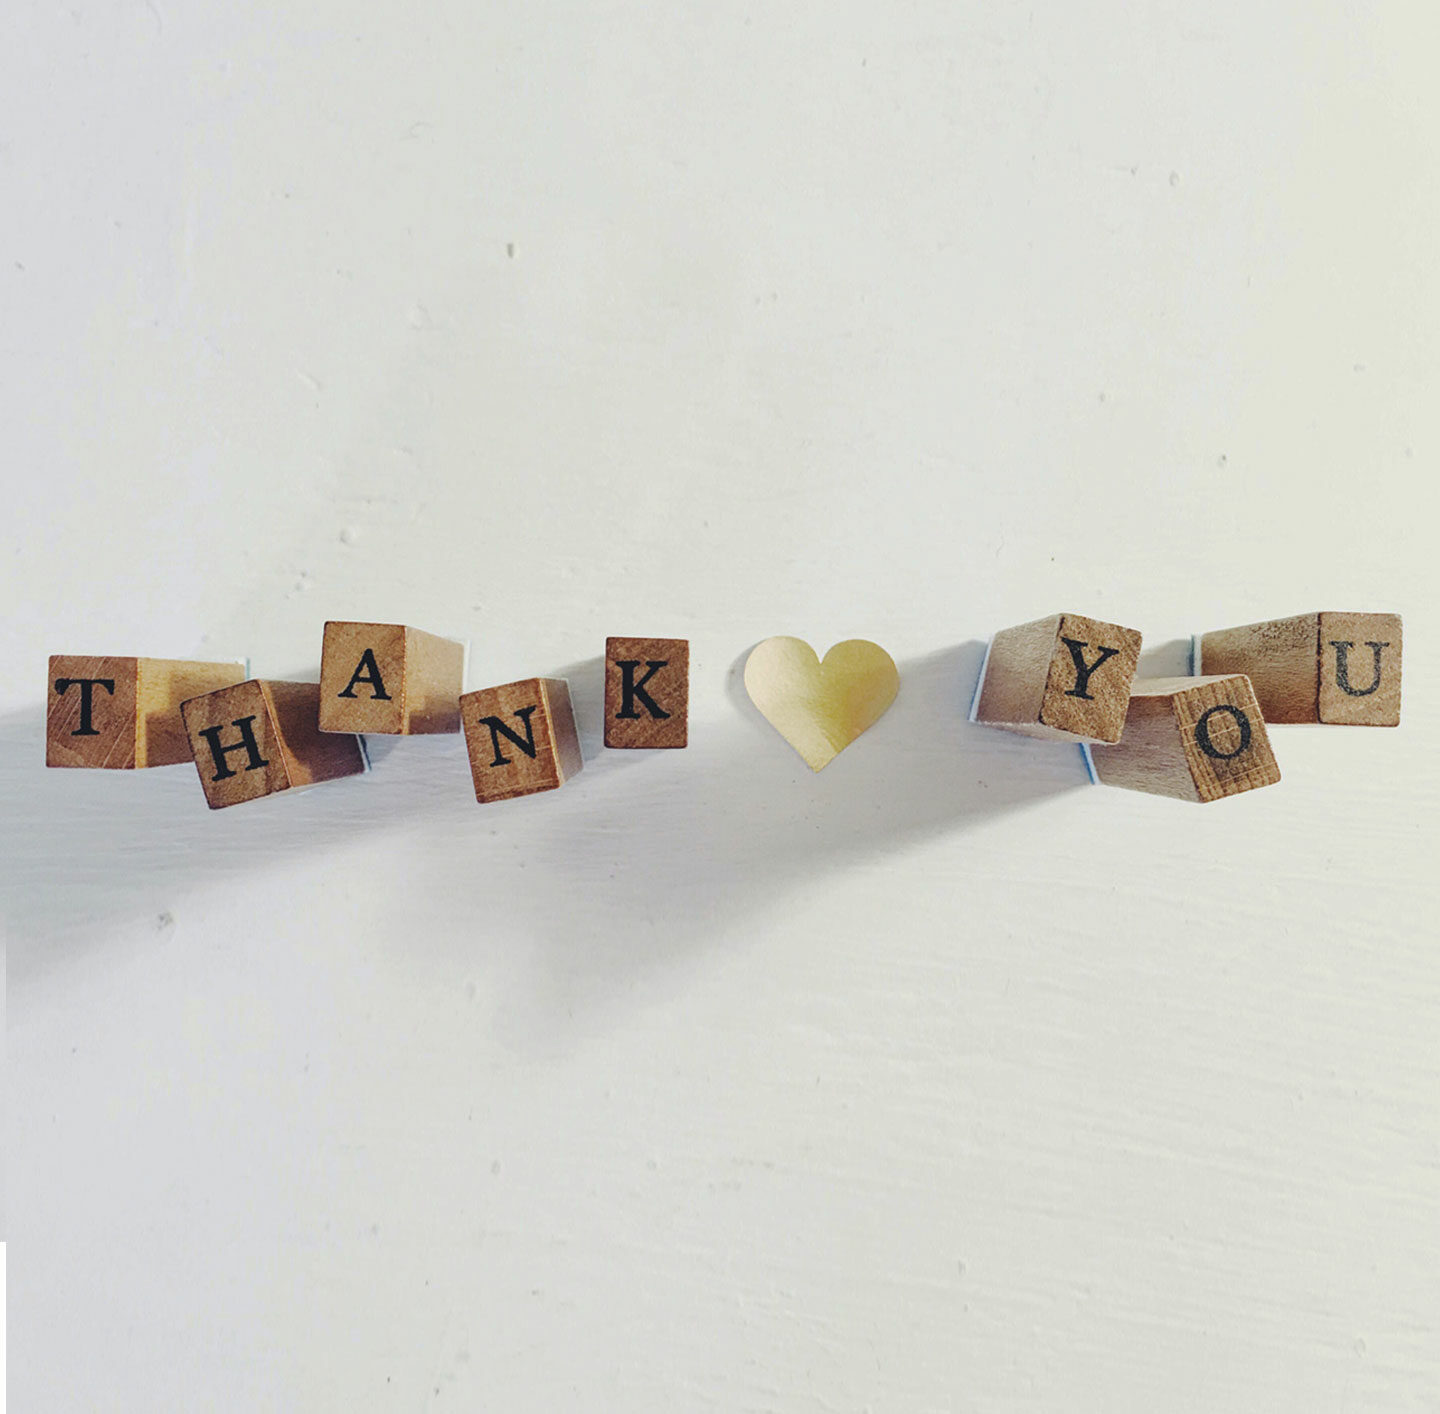 Holzwürfel bilden den Satz "Thank you".